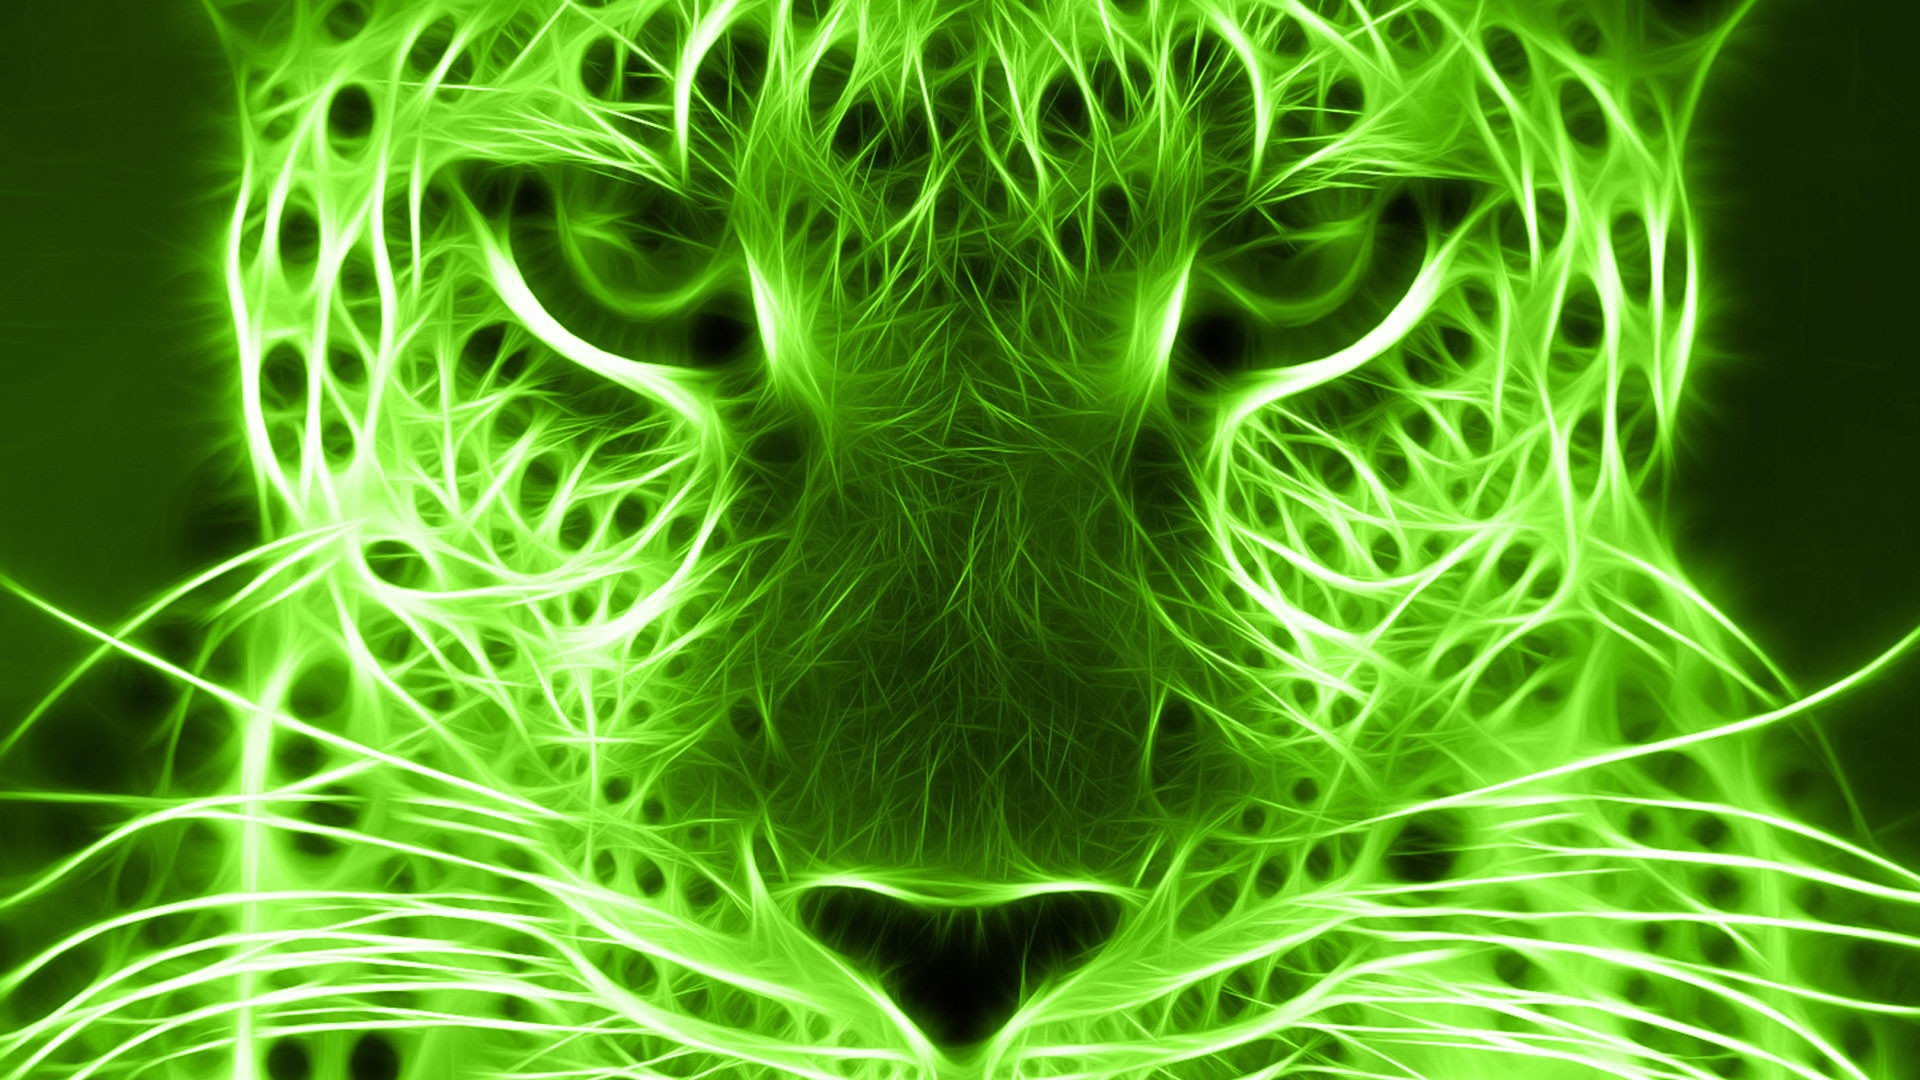 Hd pics photos green animals digital art neon desktop background wallpaper